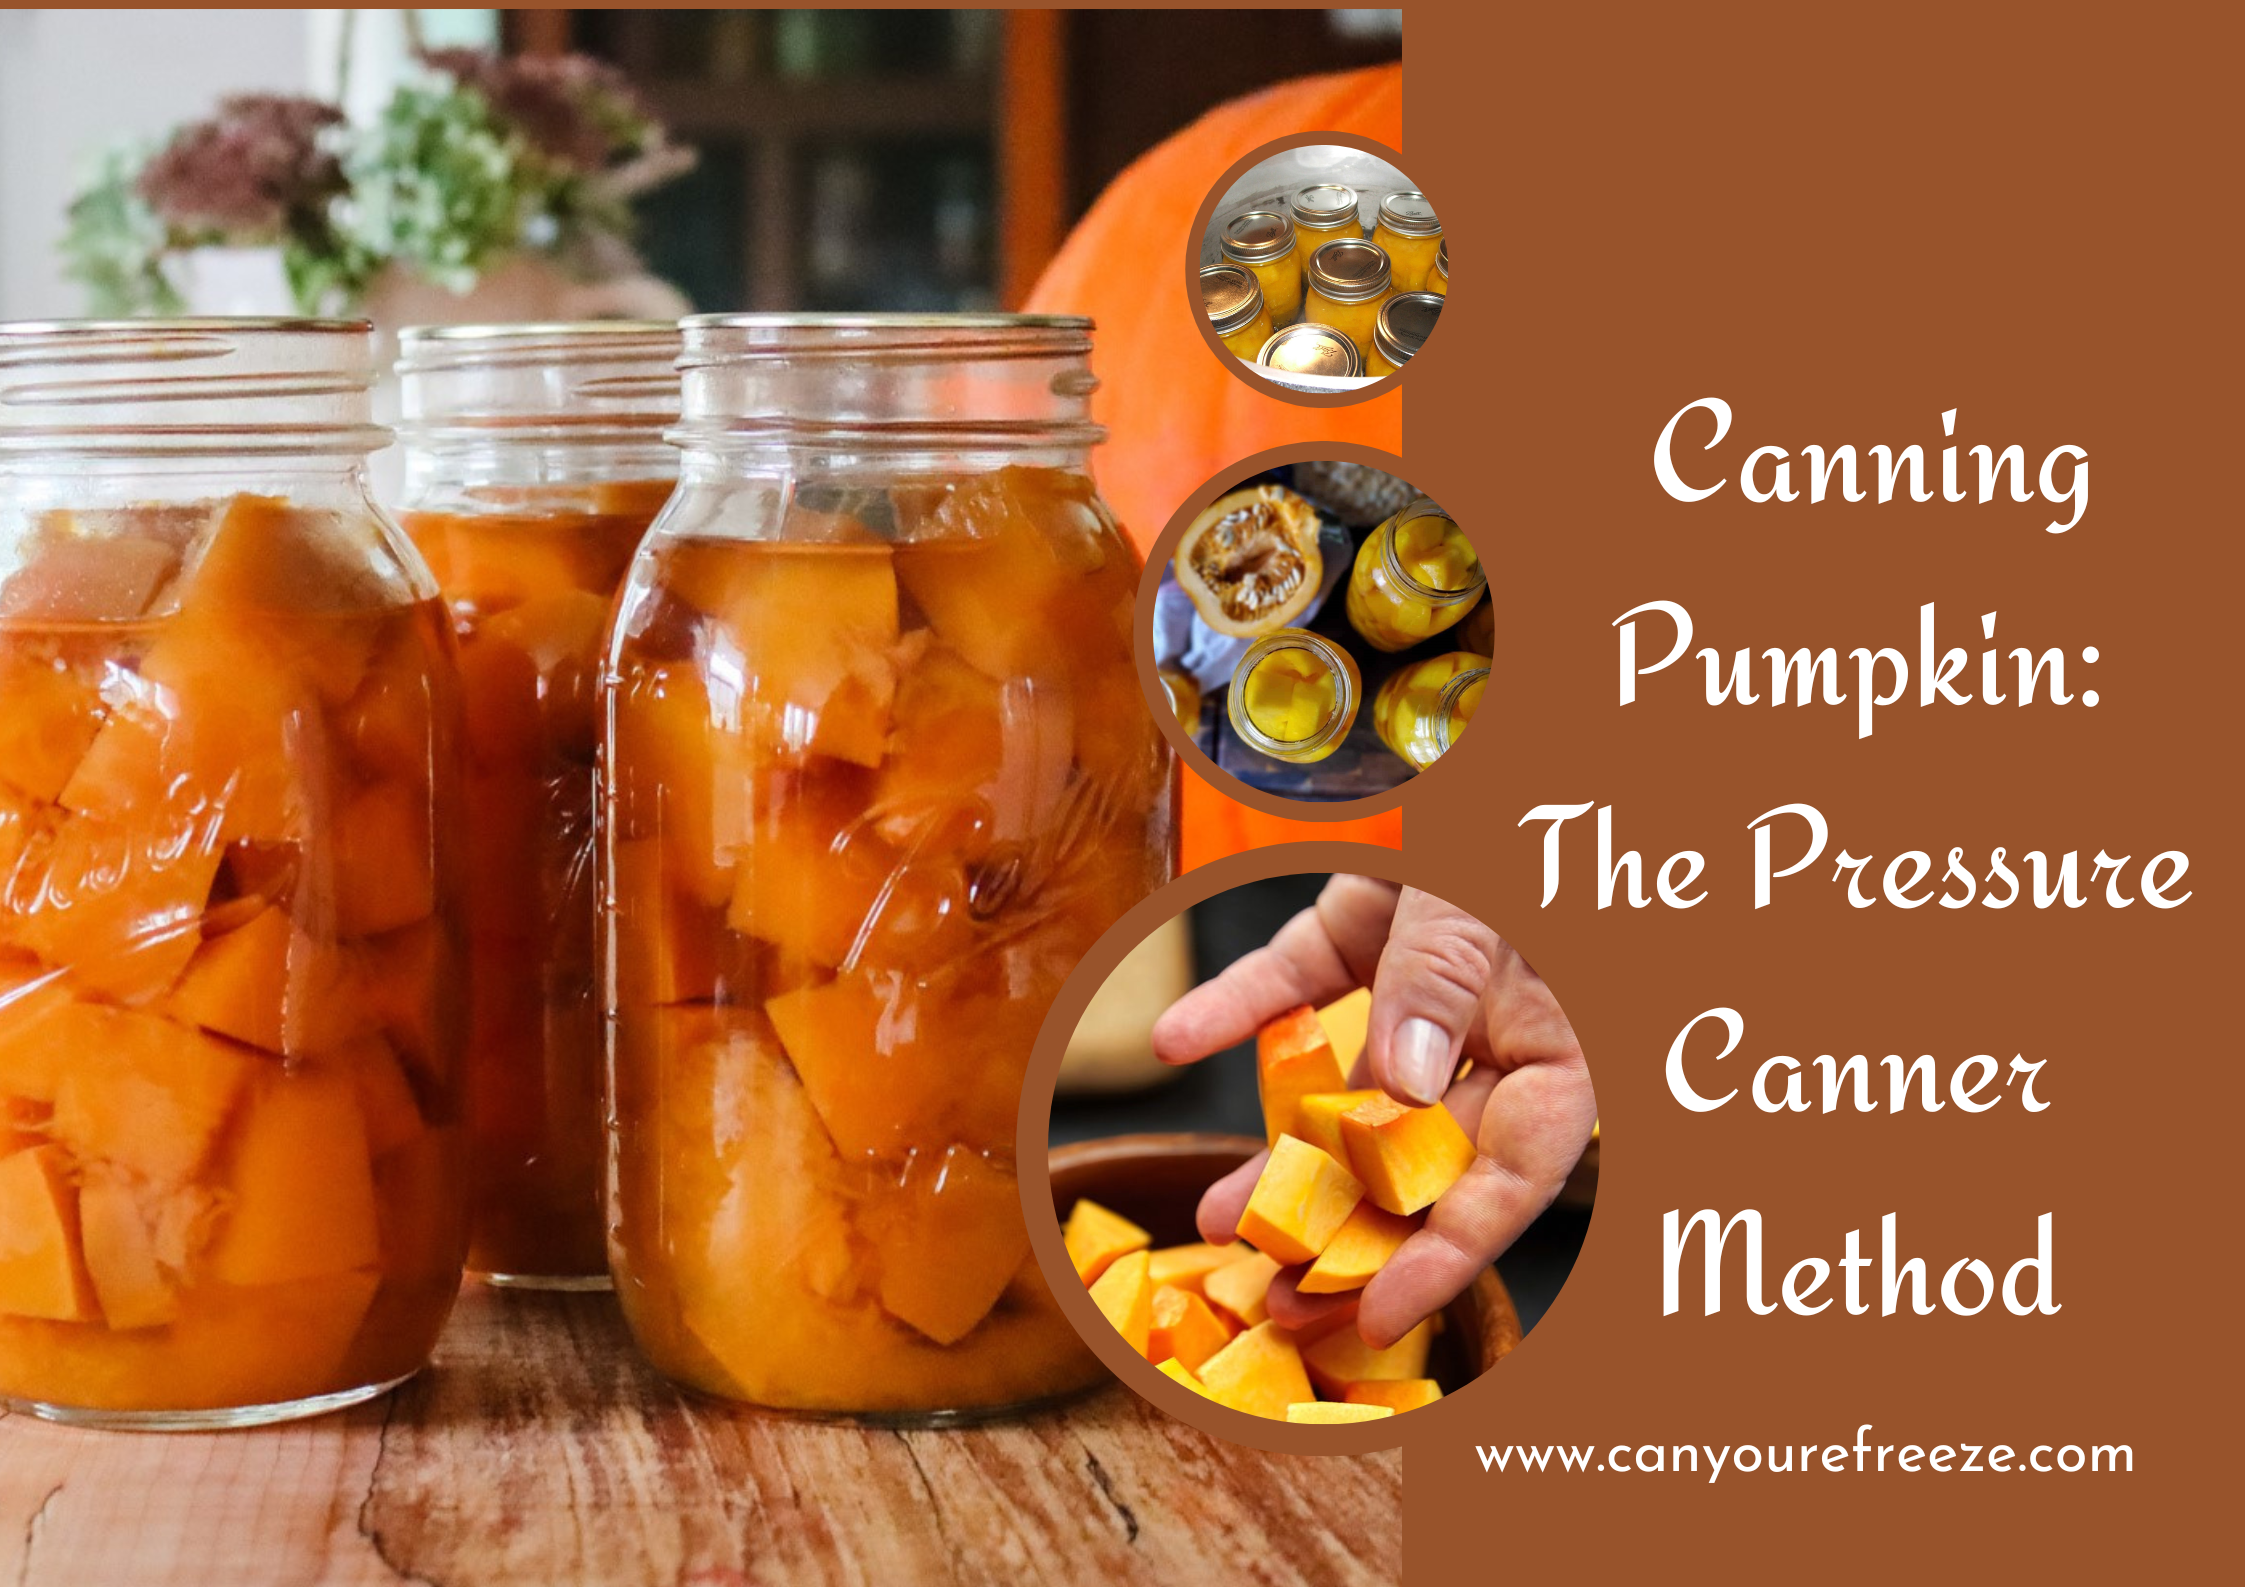 Canning Pumpkins